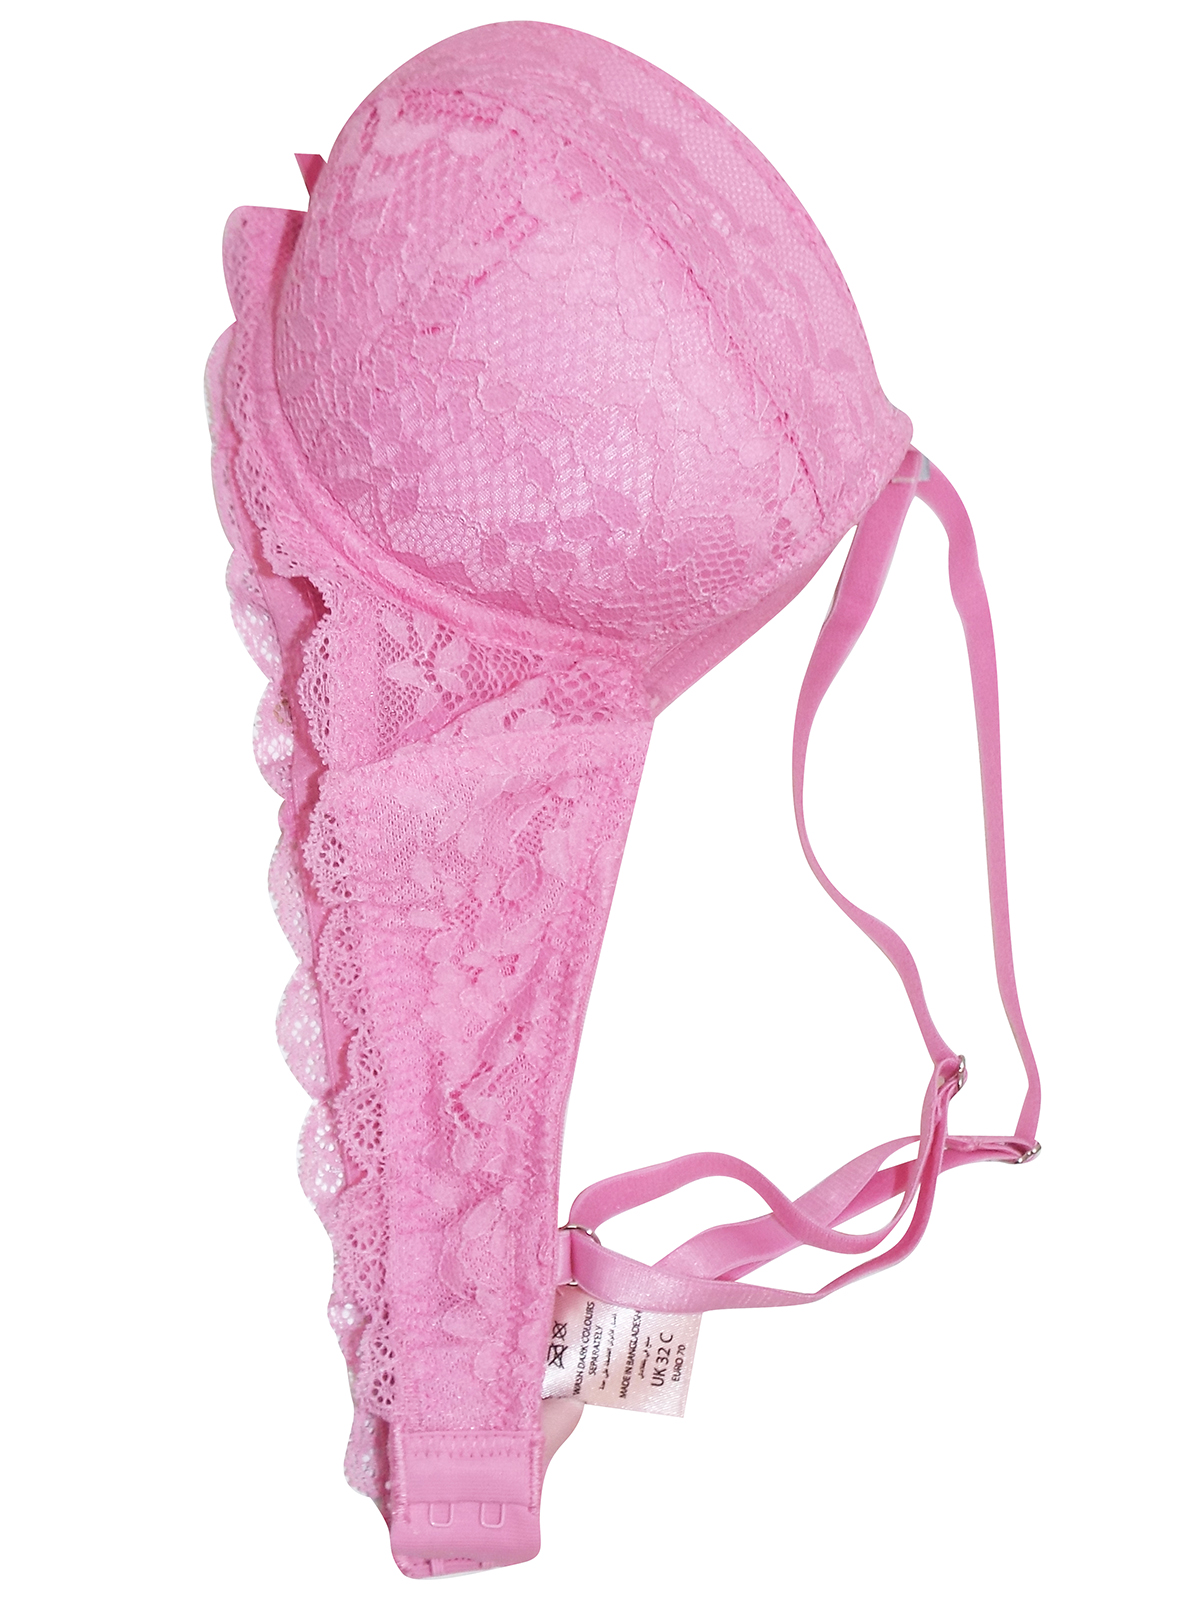 28F/60G/65F] Boux Avenue Mollie plunge bra, Women's Fashion, New  Undergarments & Loungewear on Carousell